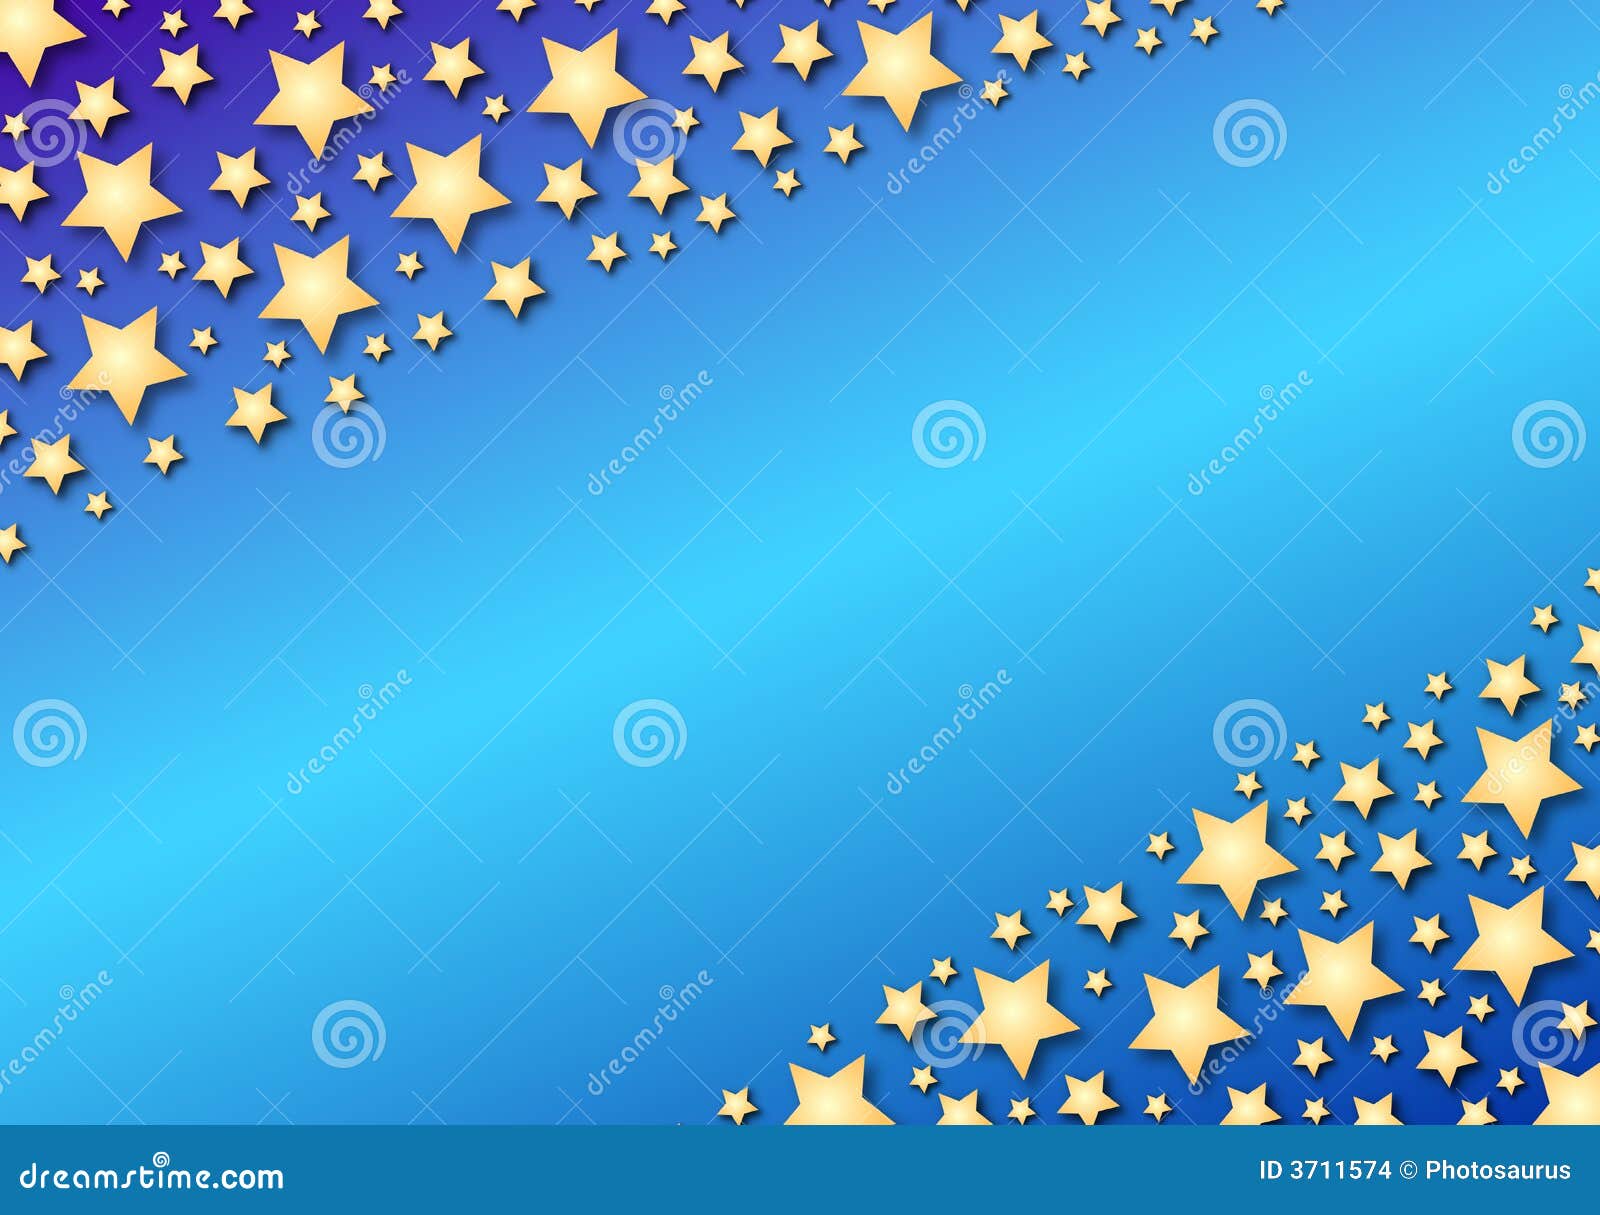 diagonal stars on blue gradient